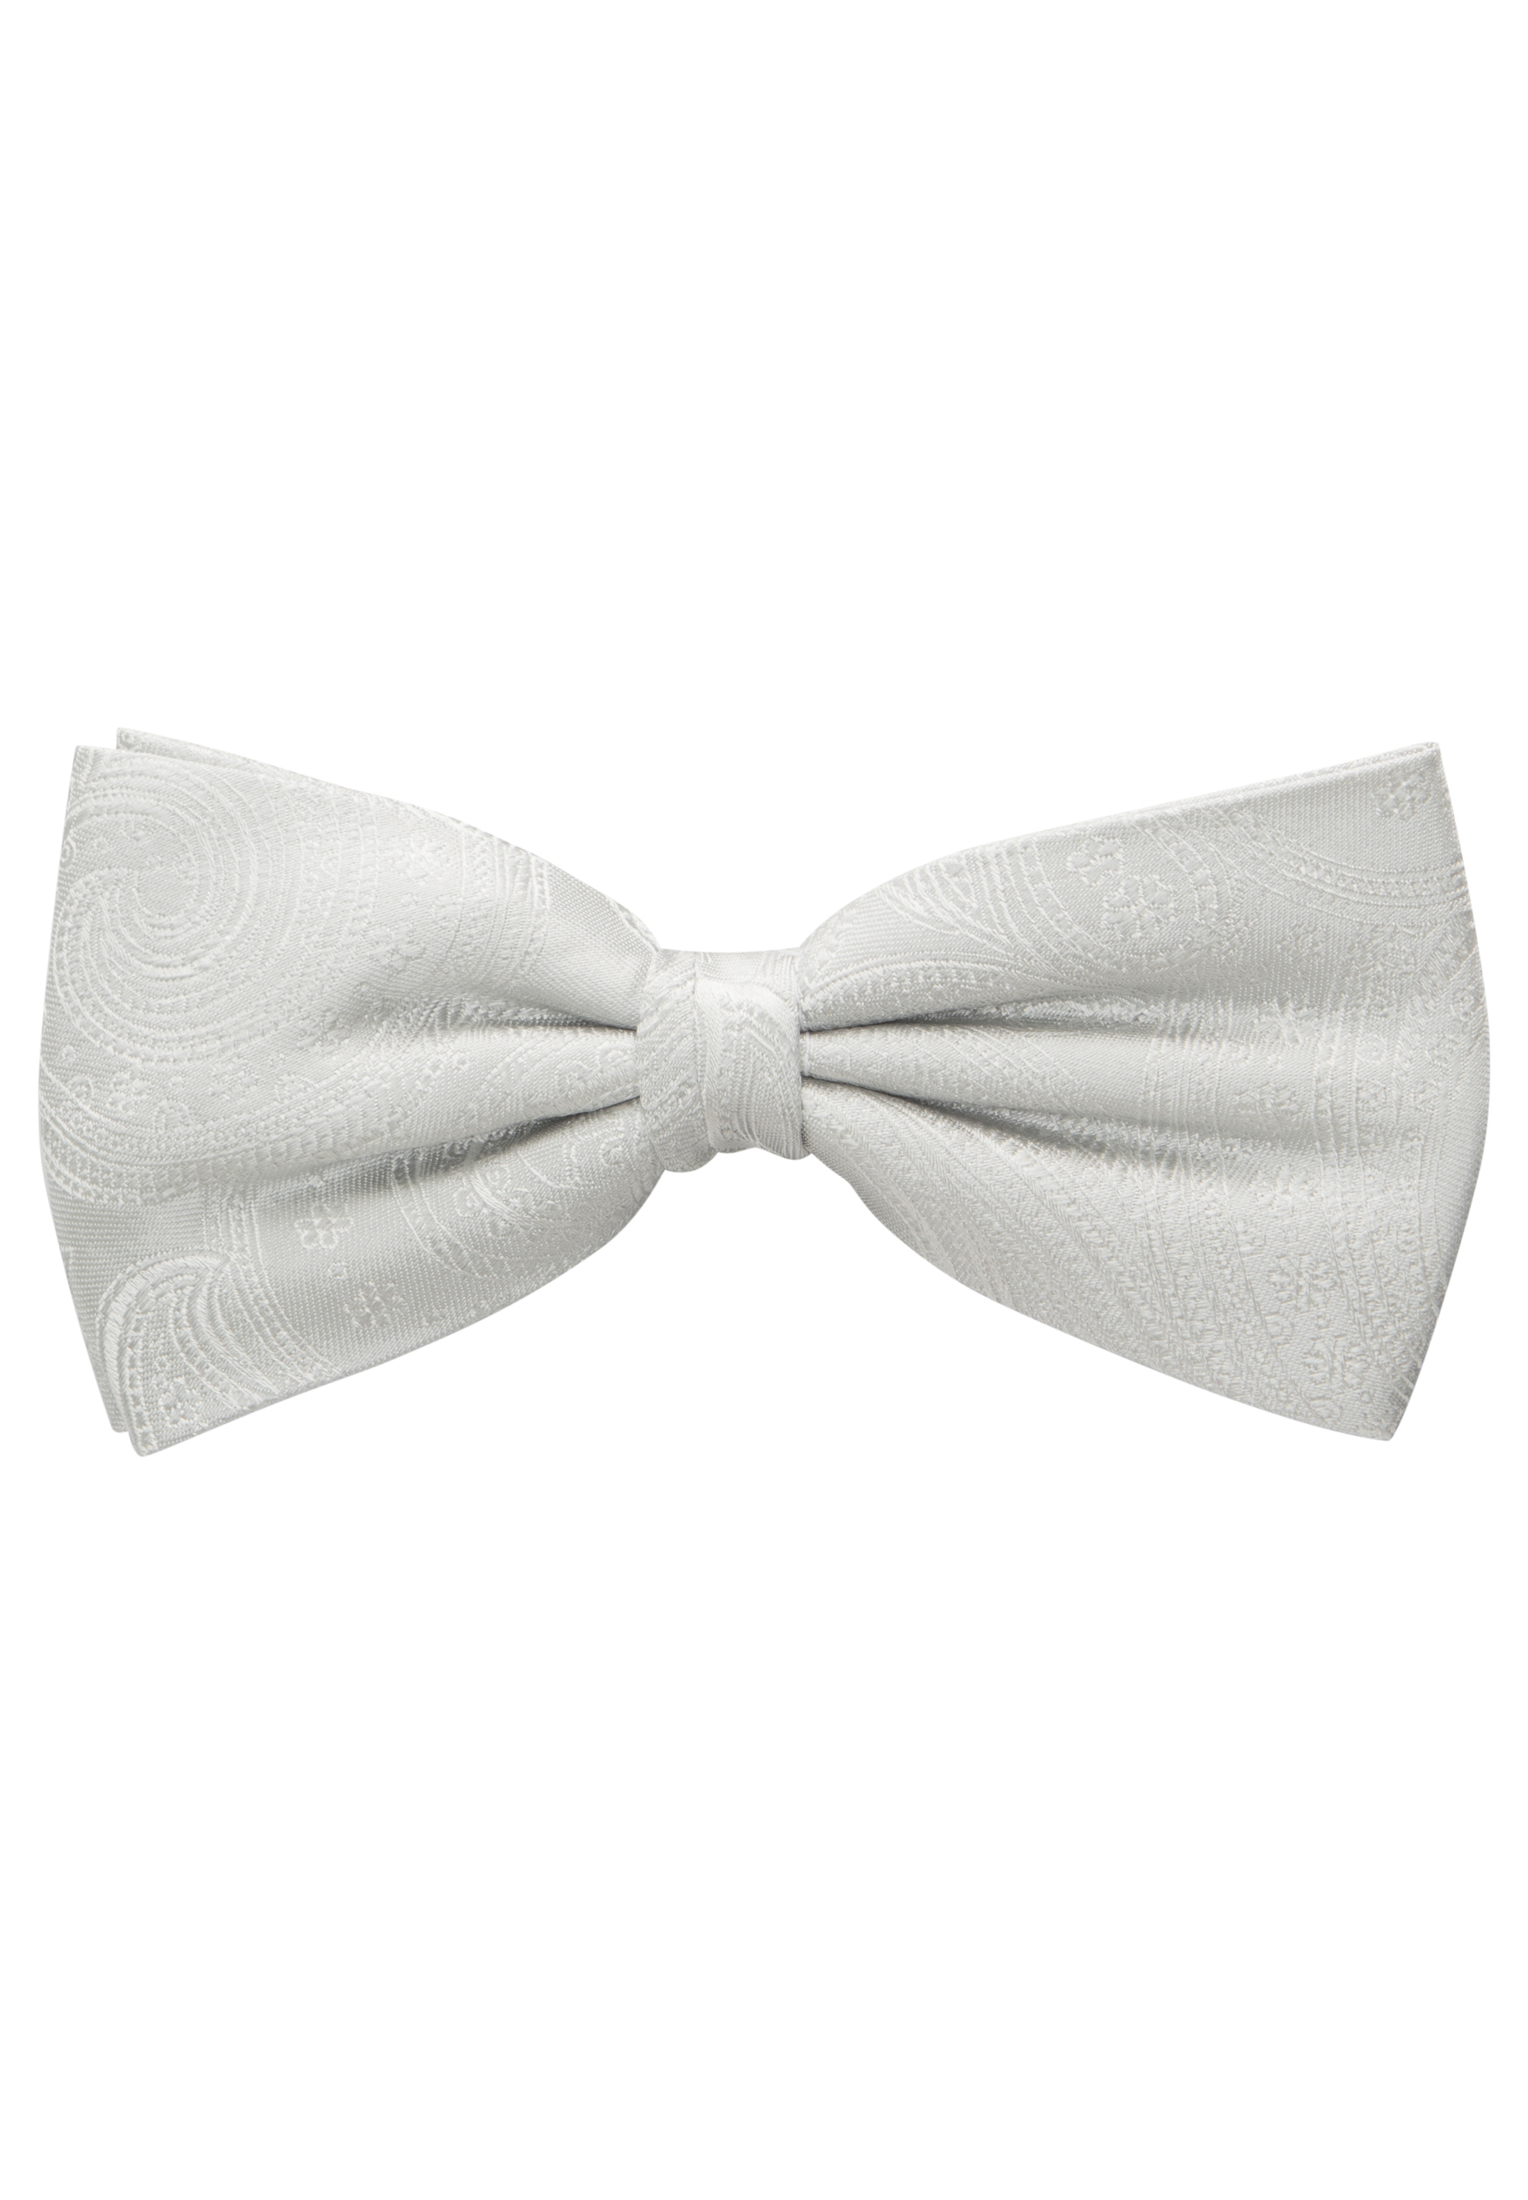 ETERNA patterned bow tie